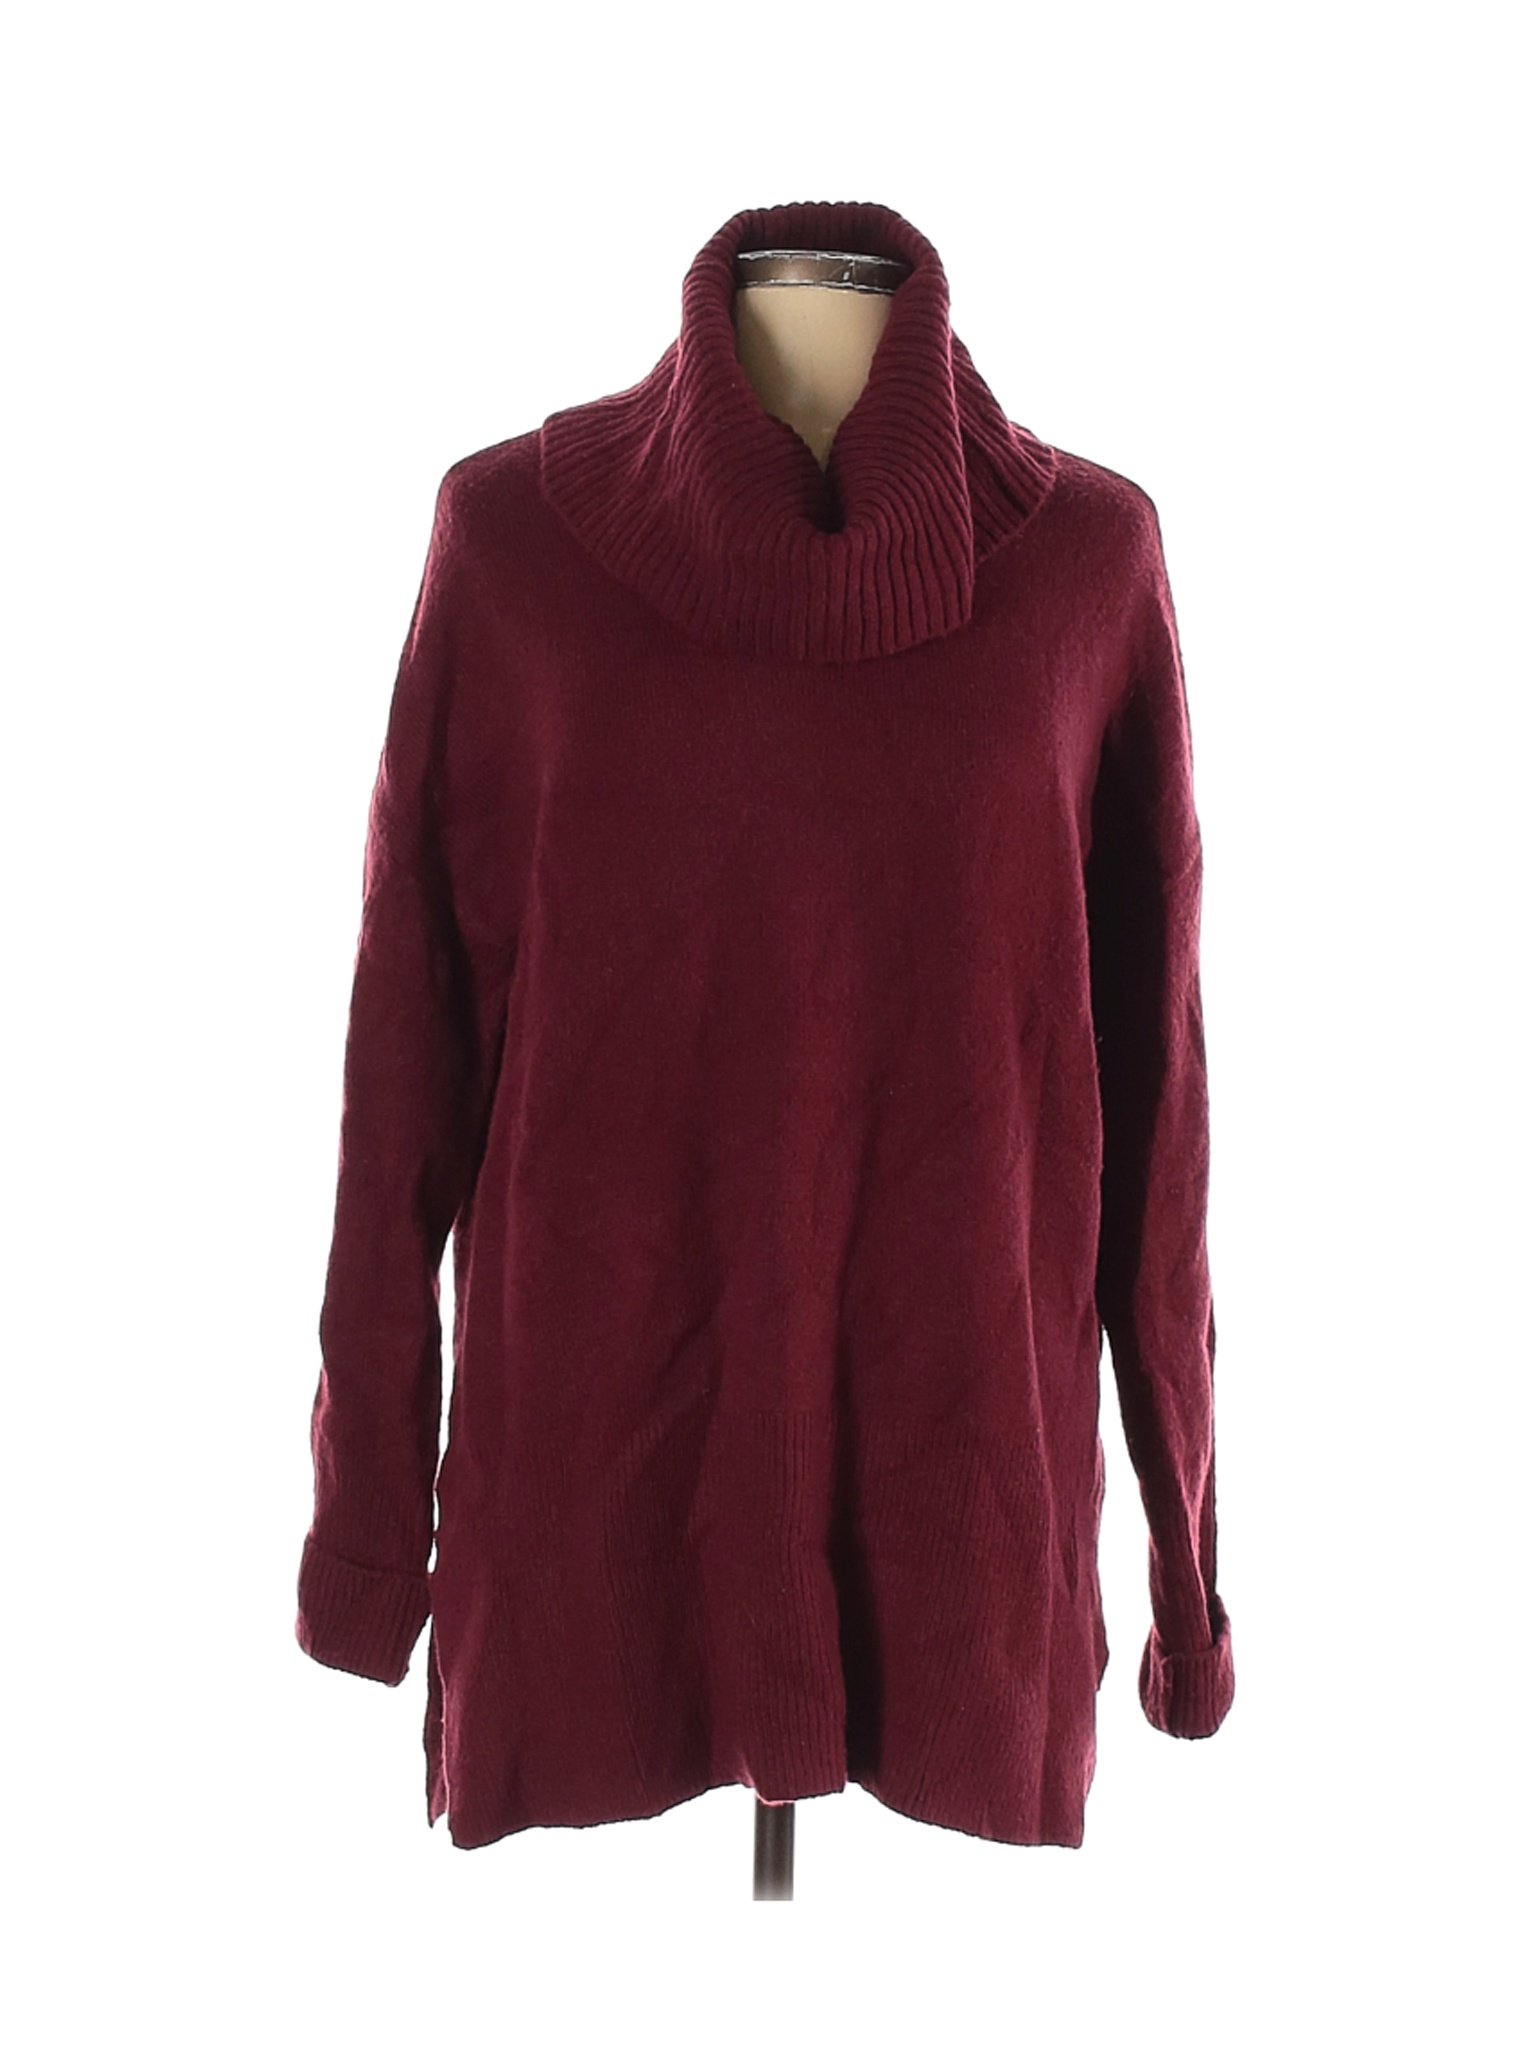 Nanette Lepore Women Red Pullover Sweater L | eBay